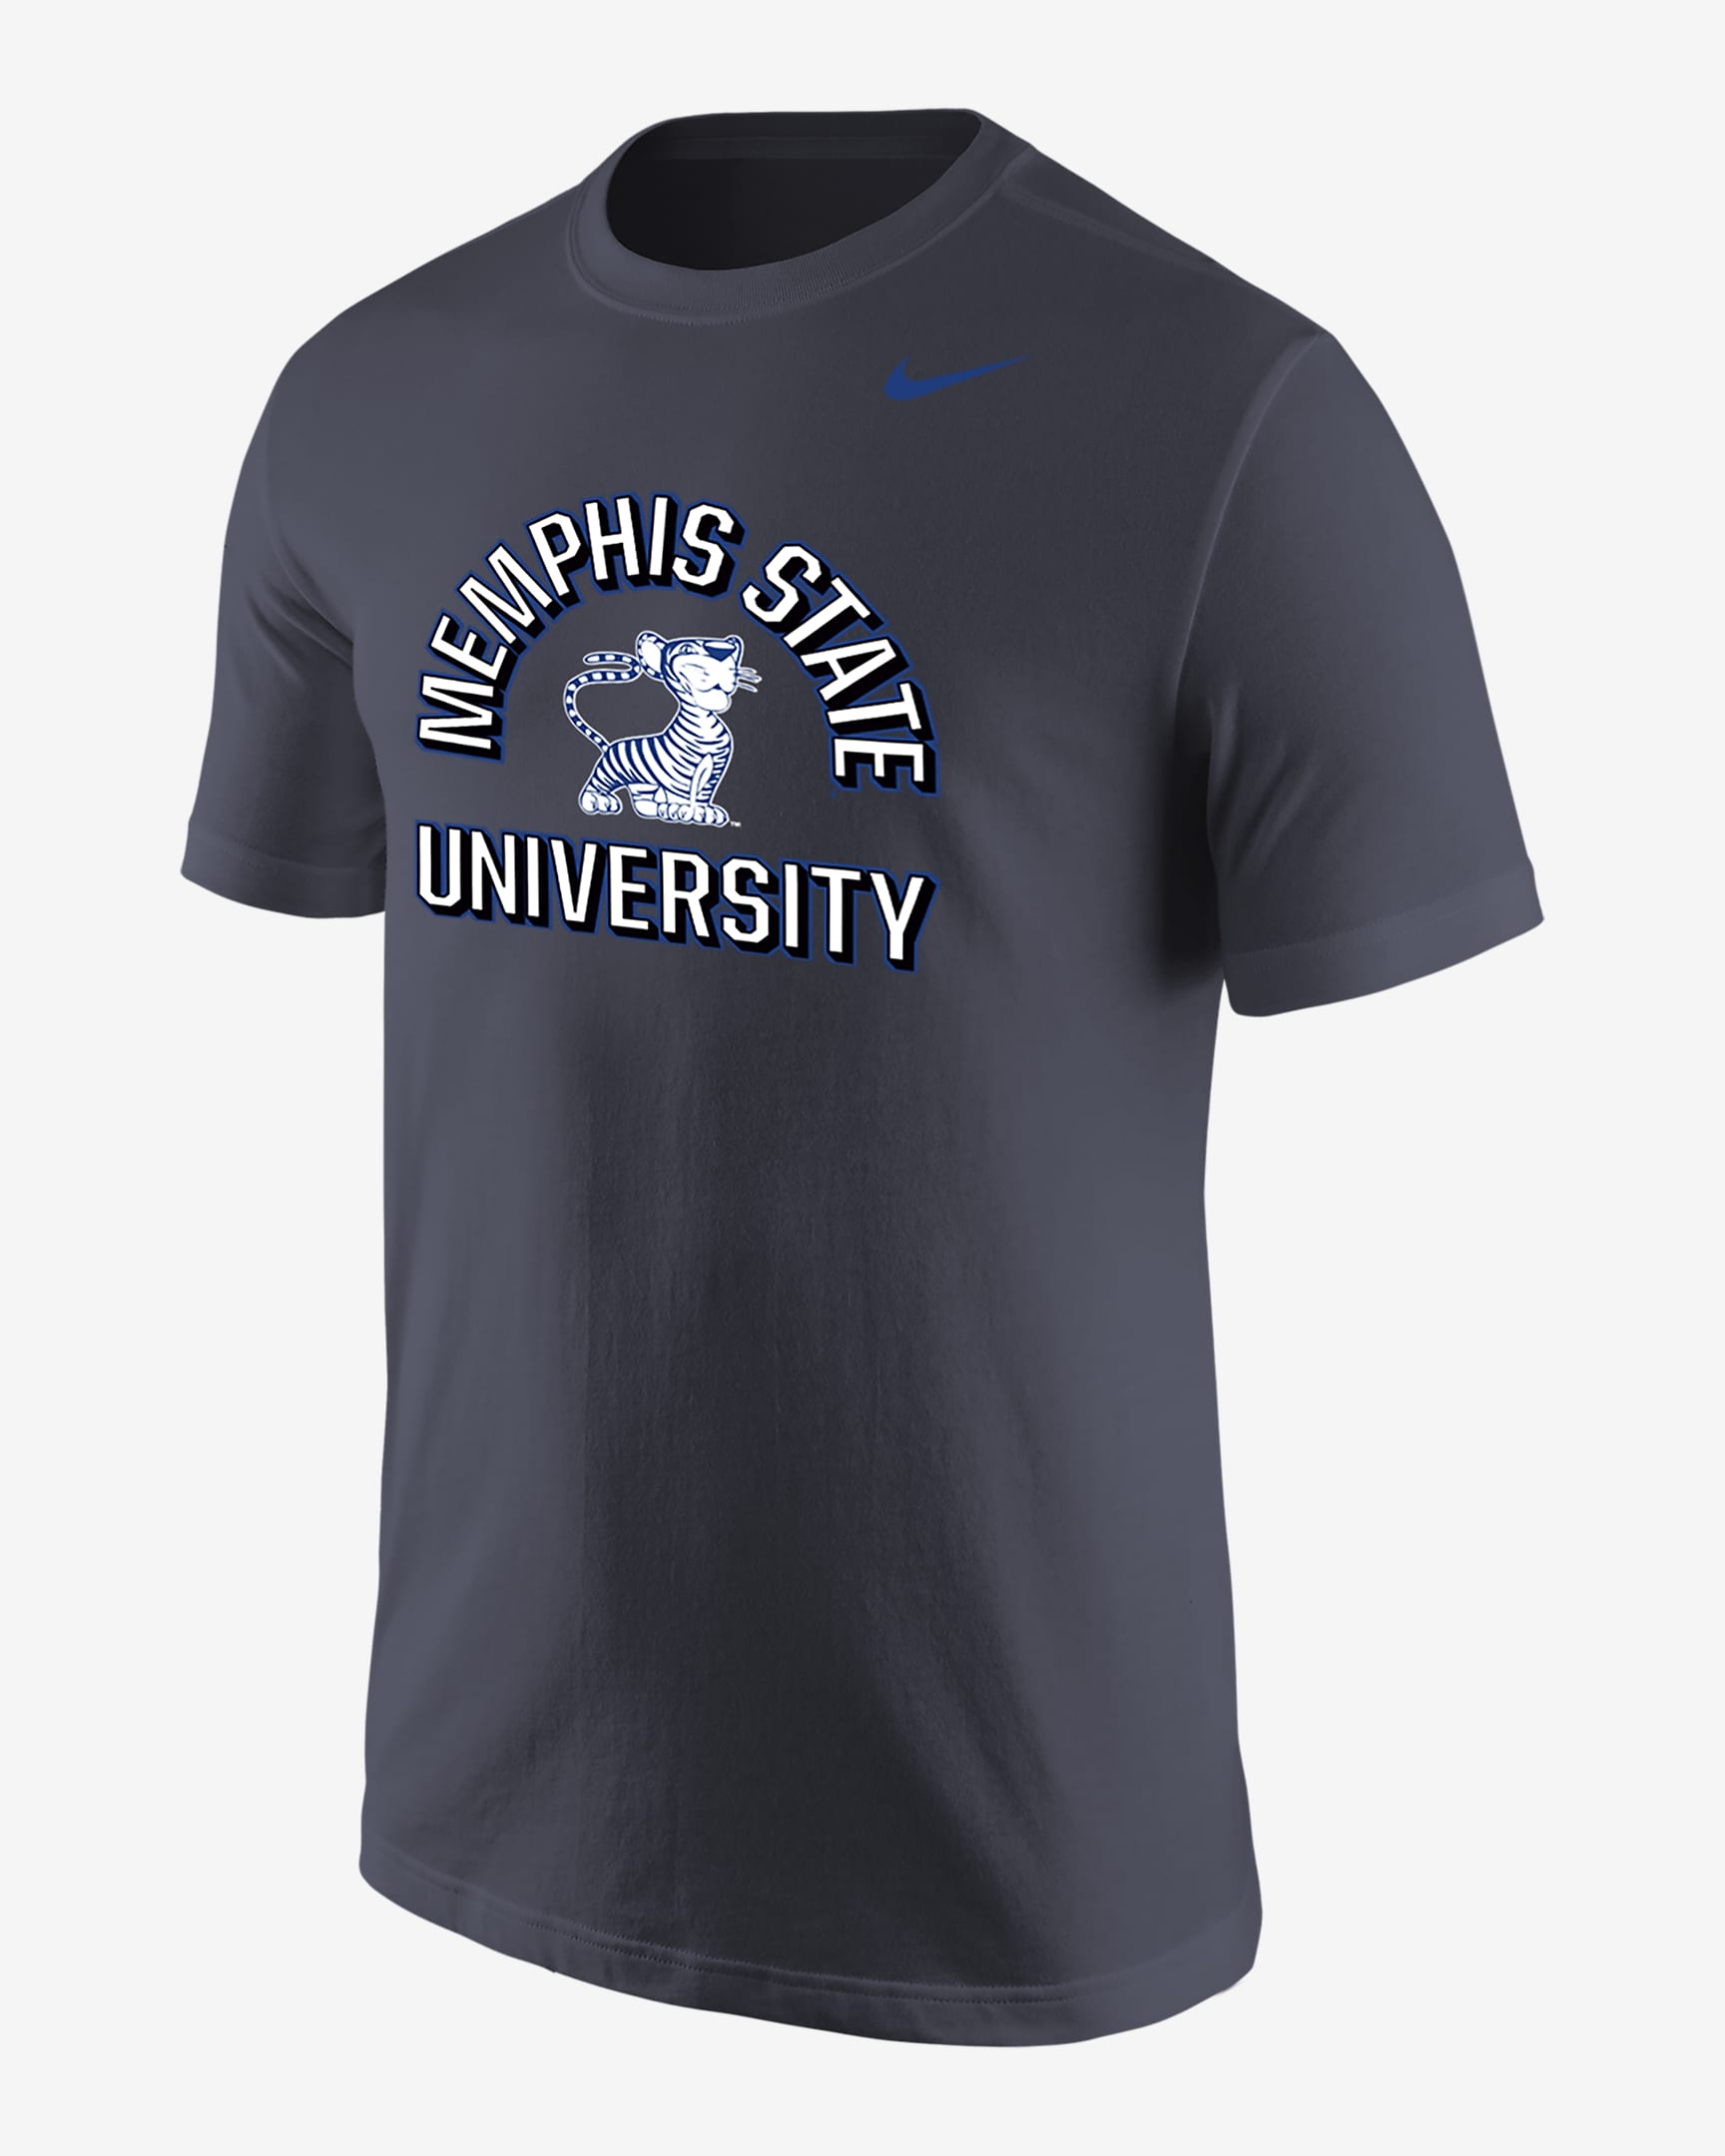 Memphis Men's Nike College 365 T-Shirt. Nike.com